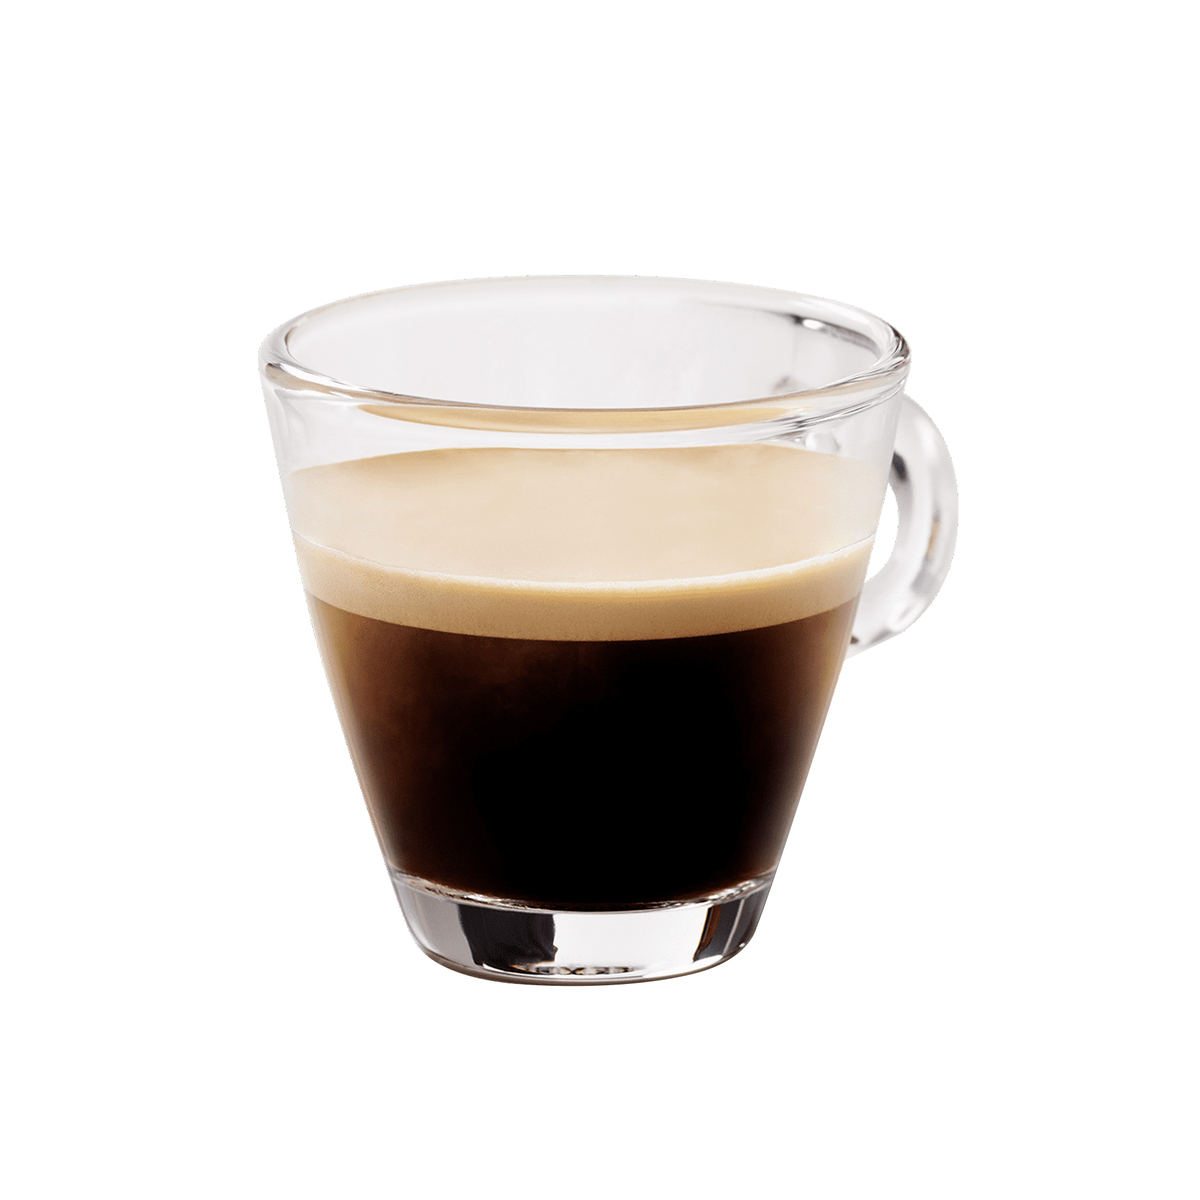 Starbucks Single Origin Guatemala Nespresso Coffee Capsules 10 pcs